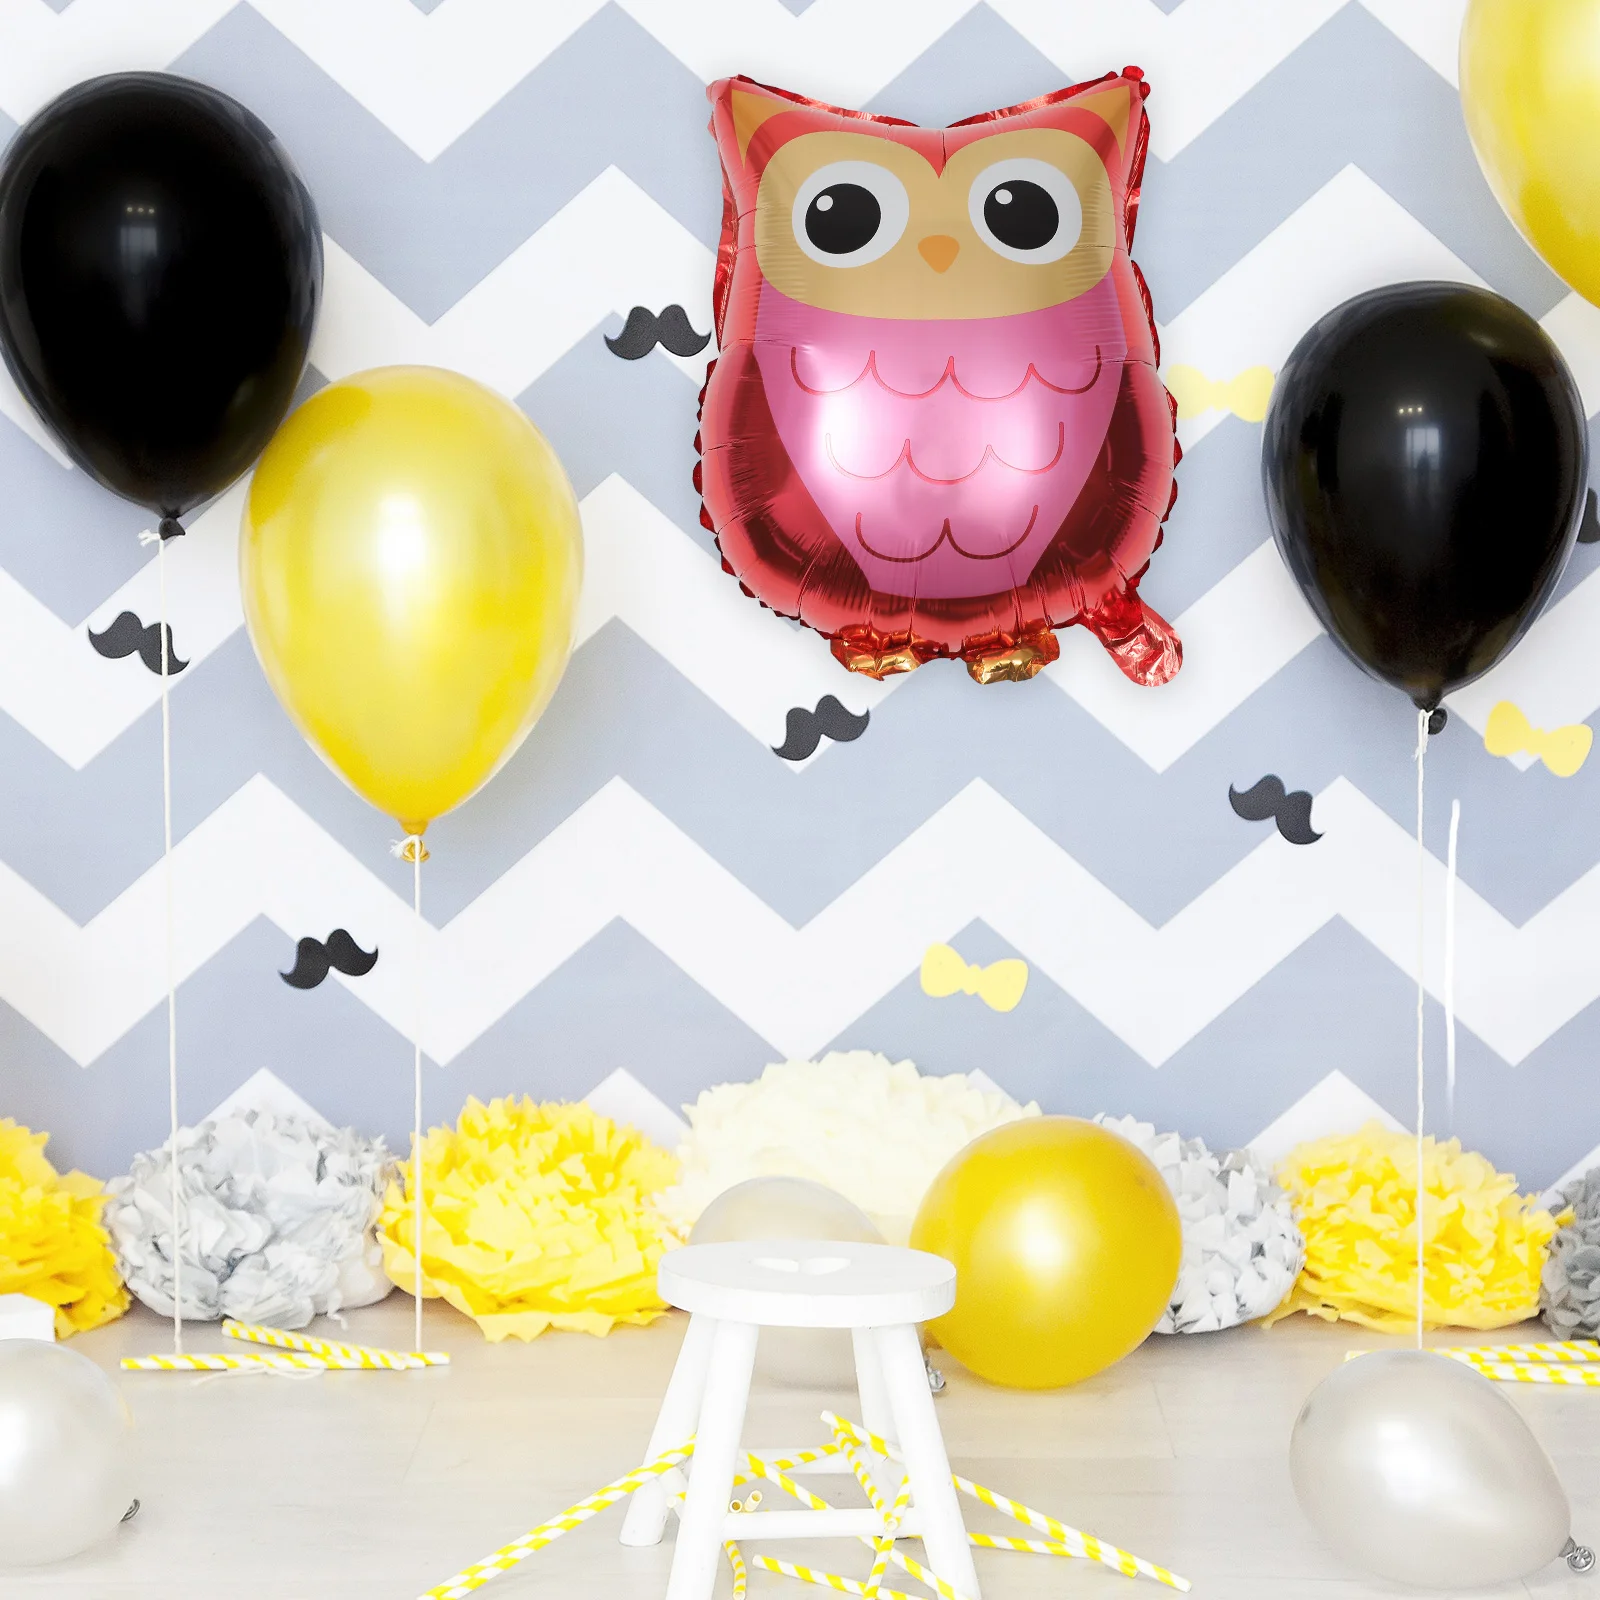 

Balloon Balloons Party Owl Animal Birthday Cartoon Doganniversaryaluminum Film Decorations Jungle Wedding Decorative Celebrate